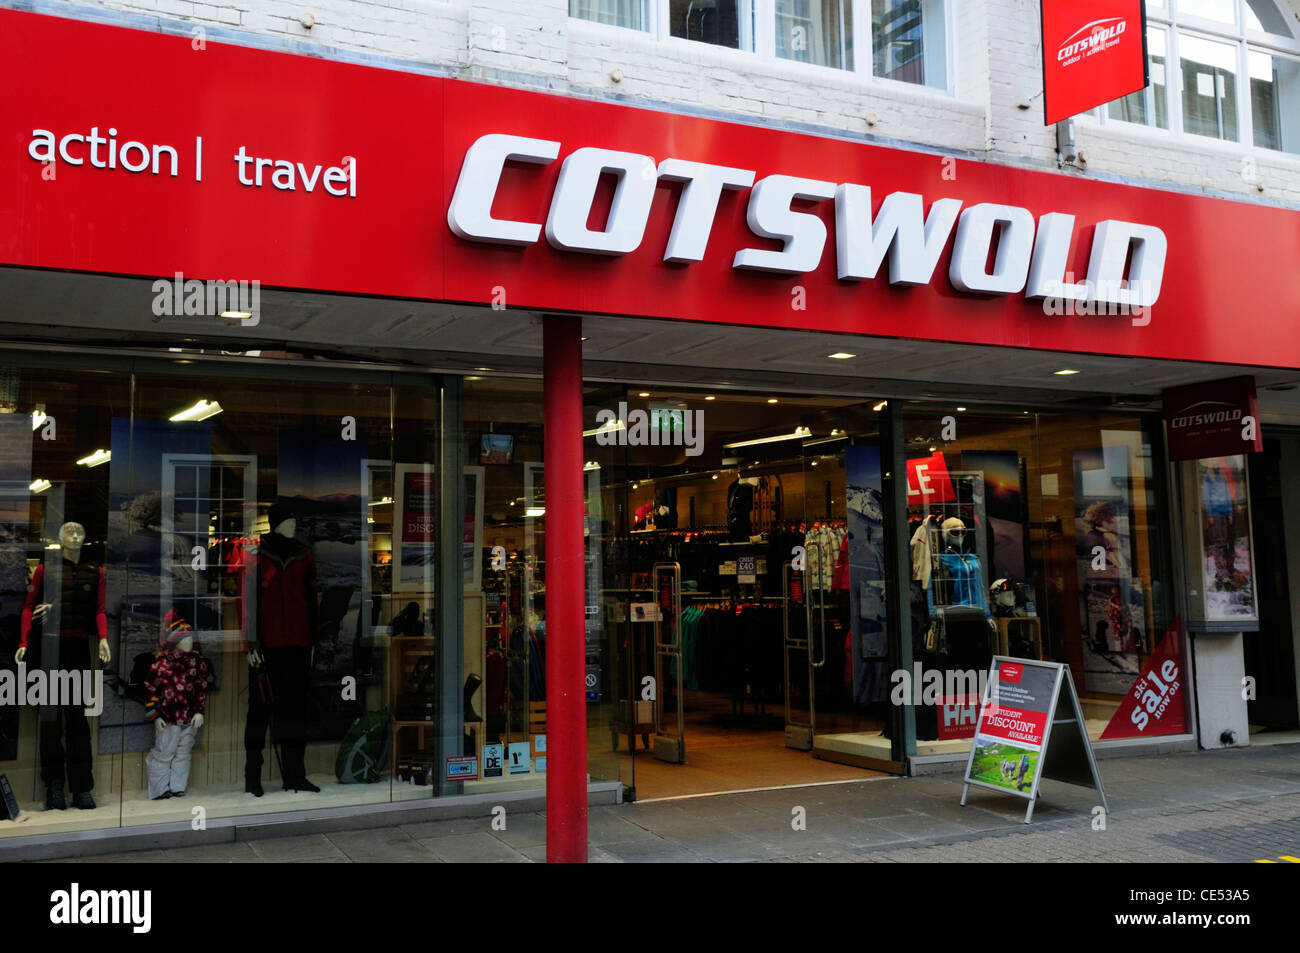 Cotswold Outdoor Shop, Cambridge, England, UK Stock Photo